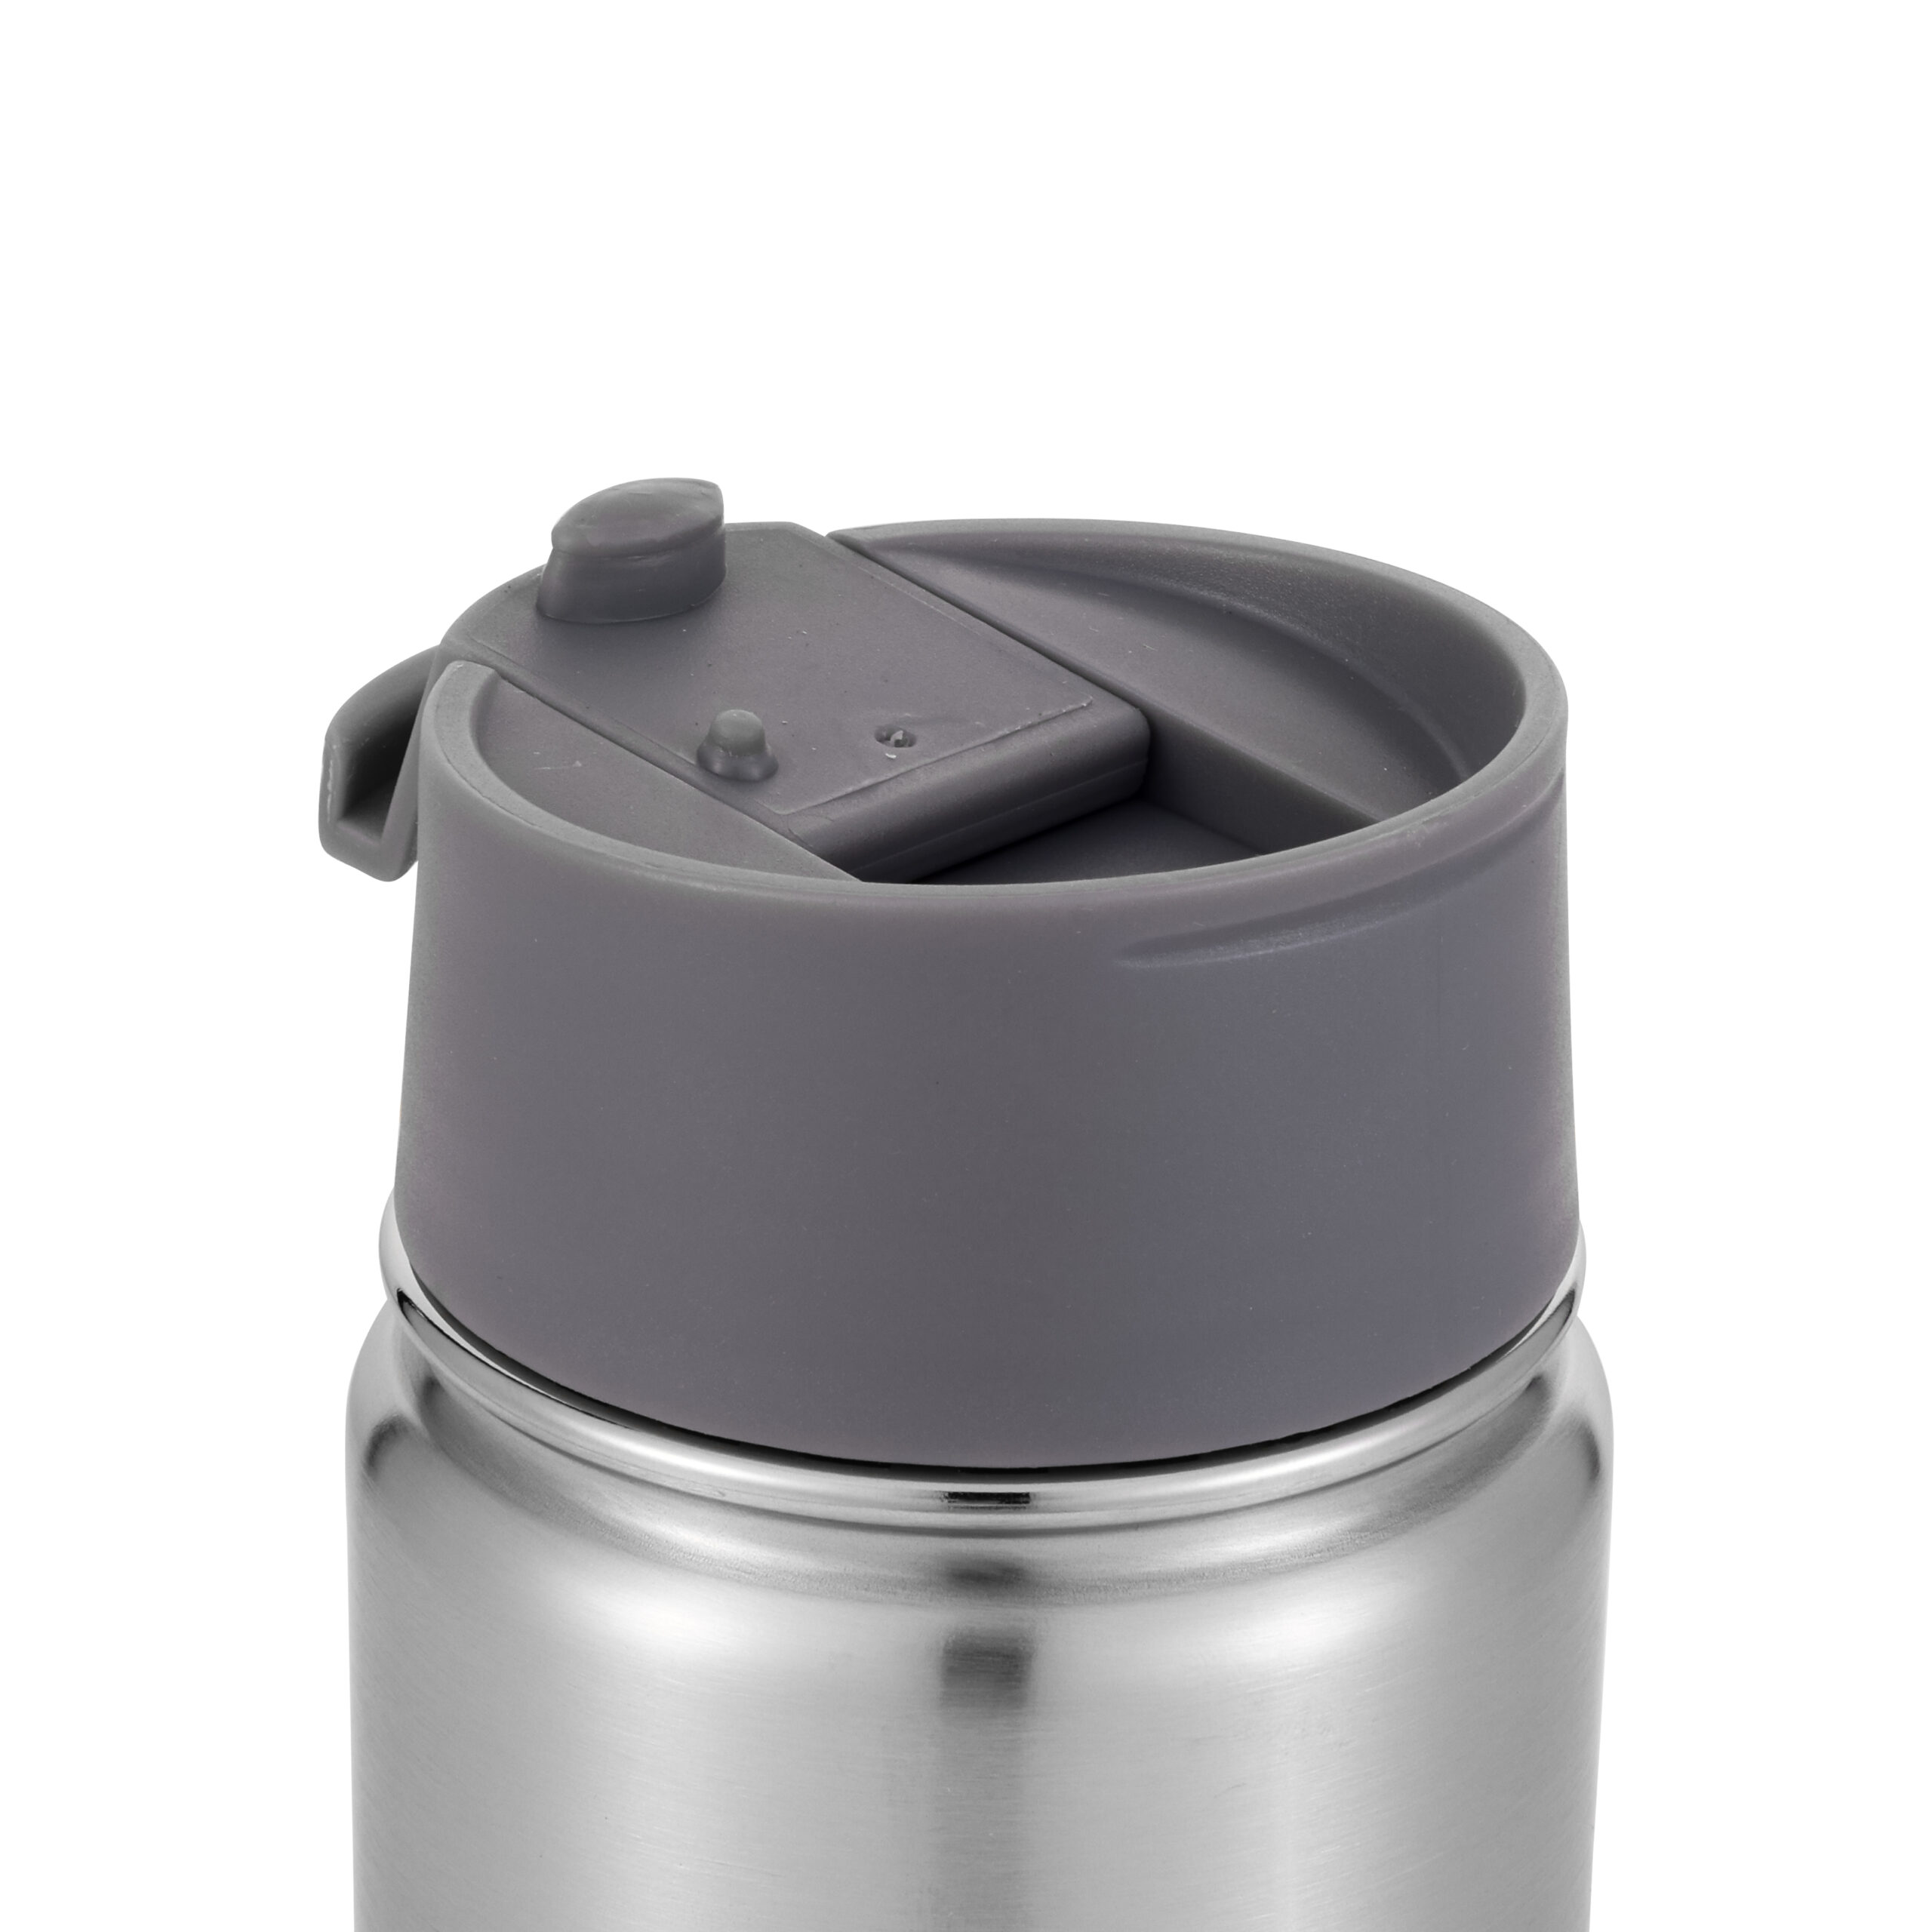 Thermos water bottle, vacuum insulation mobile phone mug 400ml